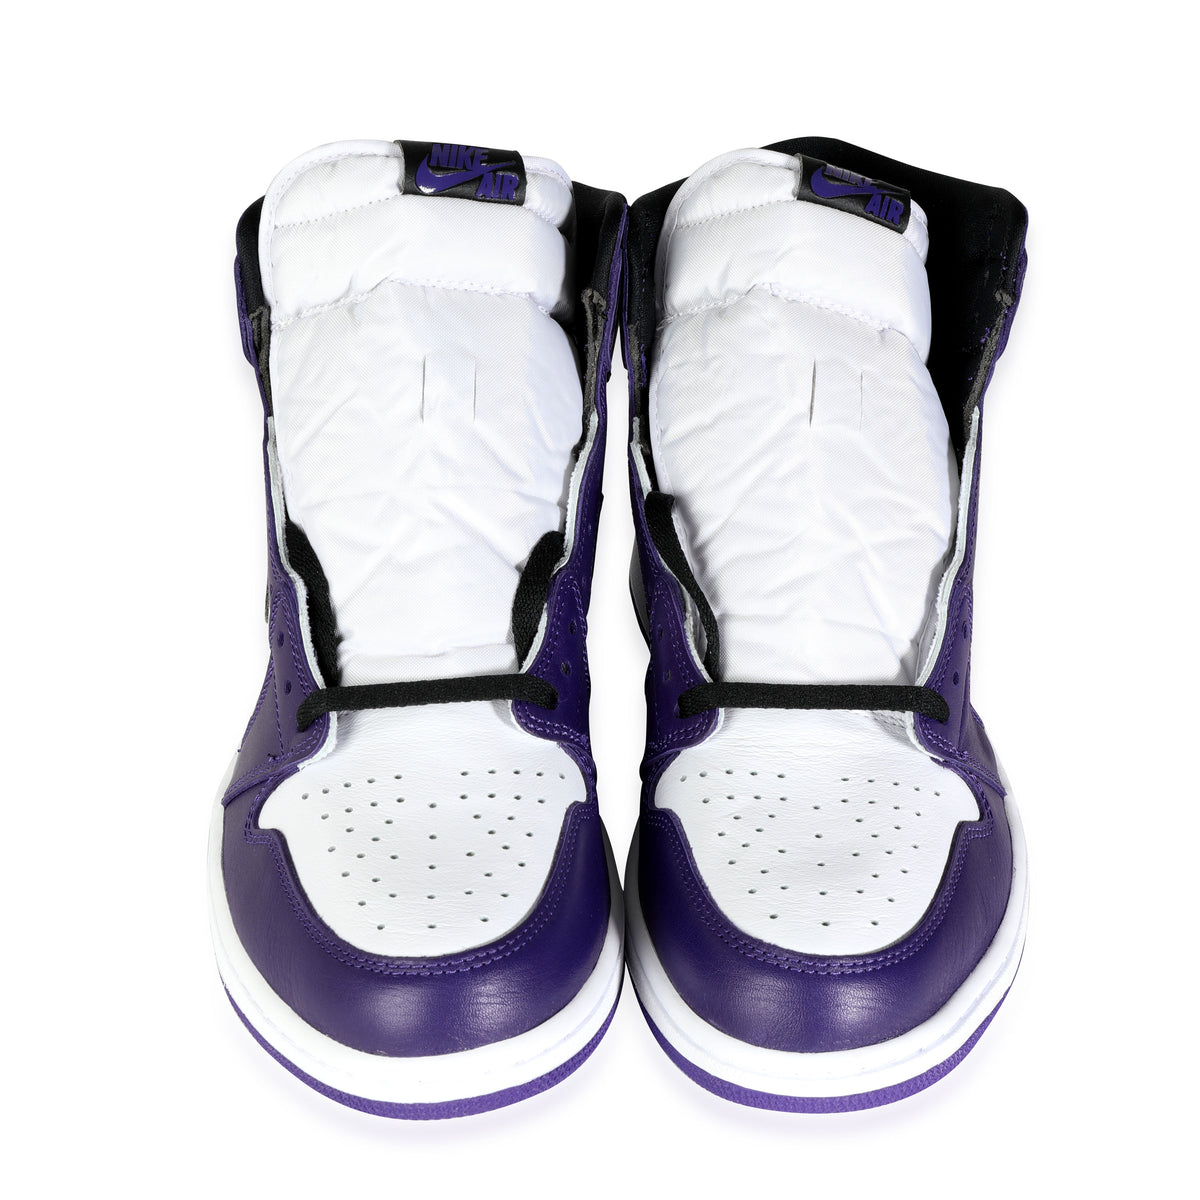 Jordan 1 Retro OG High Court Purple 2.0 for Sale, Authenticity Guaranteed